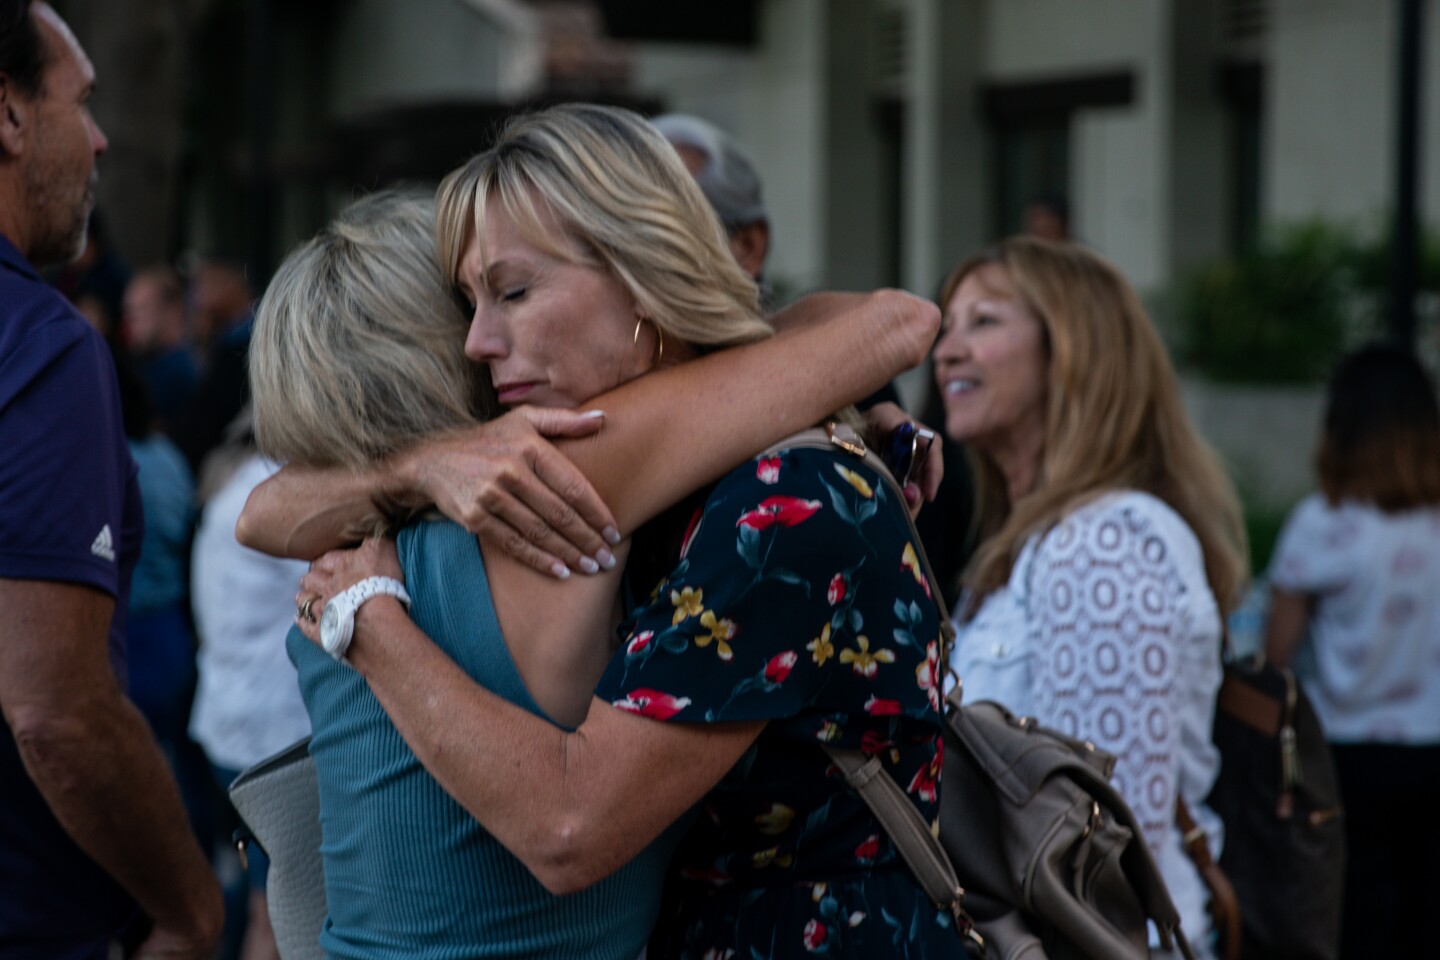 GILROY, CALIF. - JULY 29: Kelly Ramirez, of Gilroy gives a hug, after a candlelight vigil at Gilroy City Hall on Monday, July 29, 2019 in Gilroy, Calif. (Kent Nishimura / Los Angeles Times)